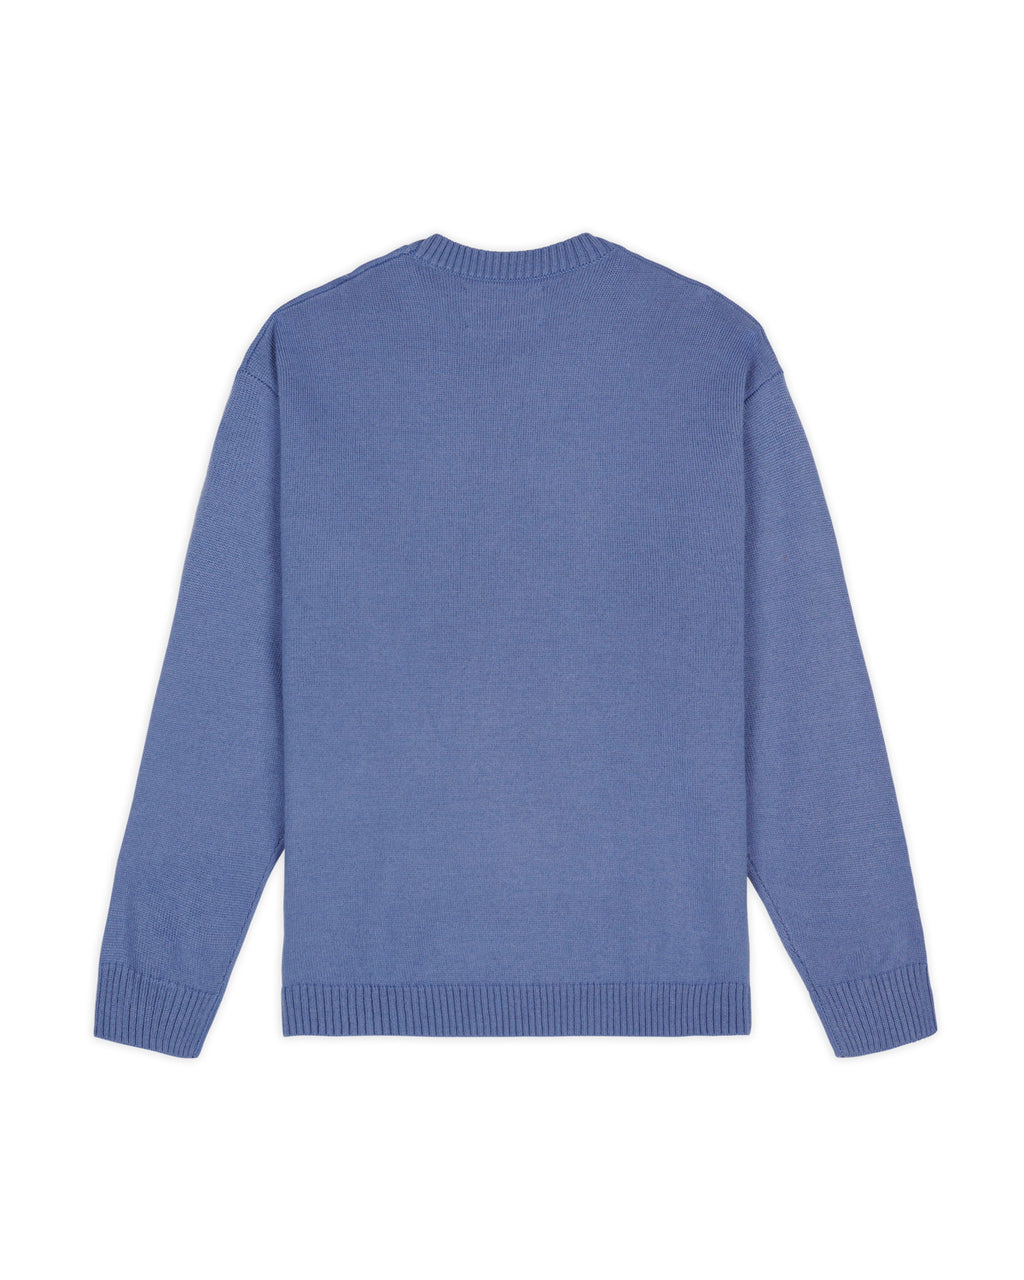 Cyber Bunny Sweater - Blue 2